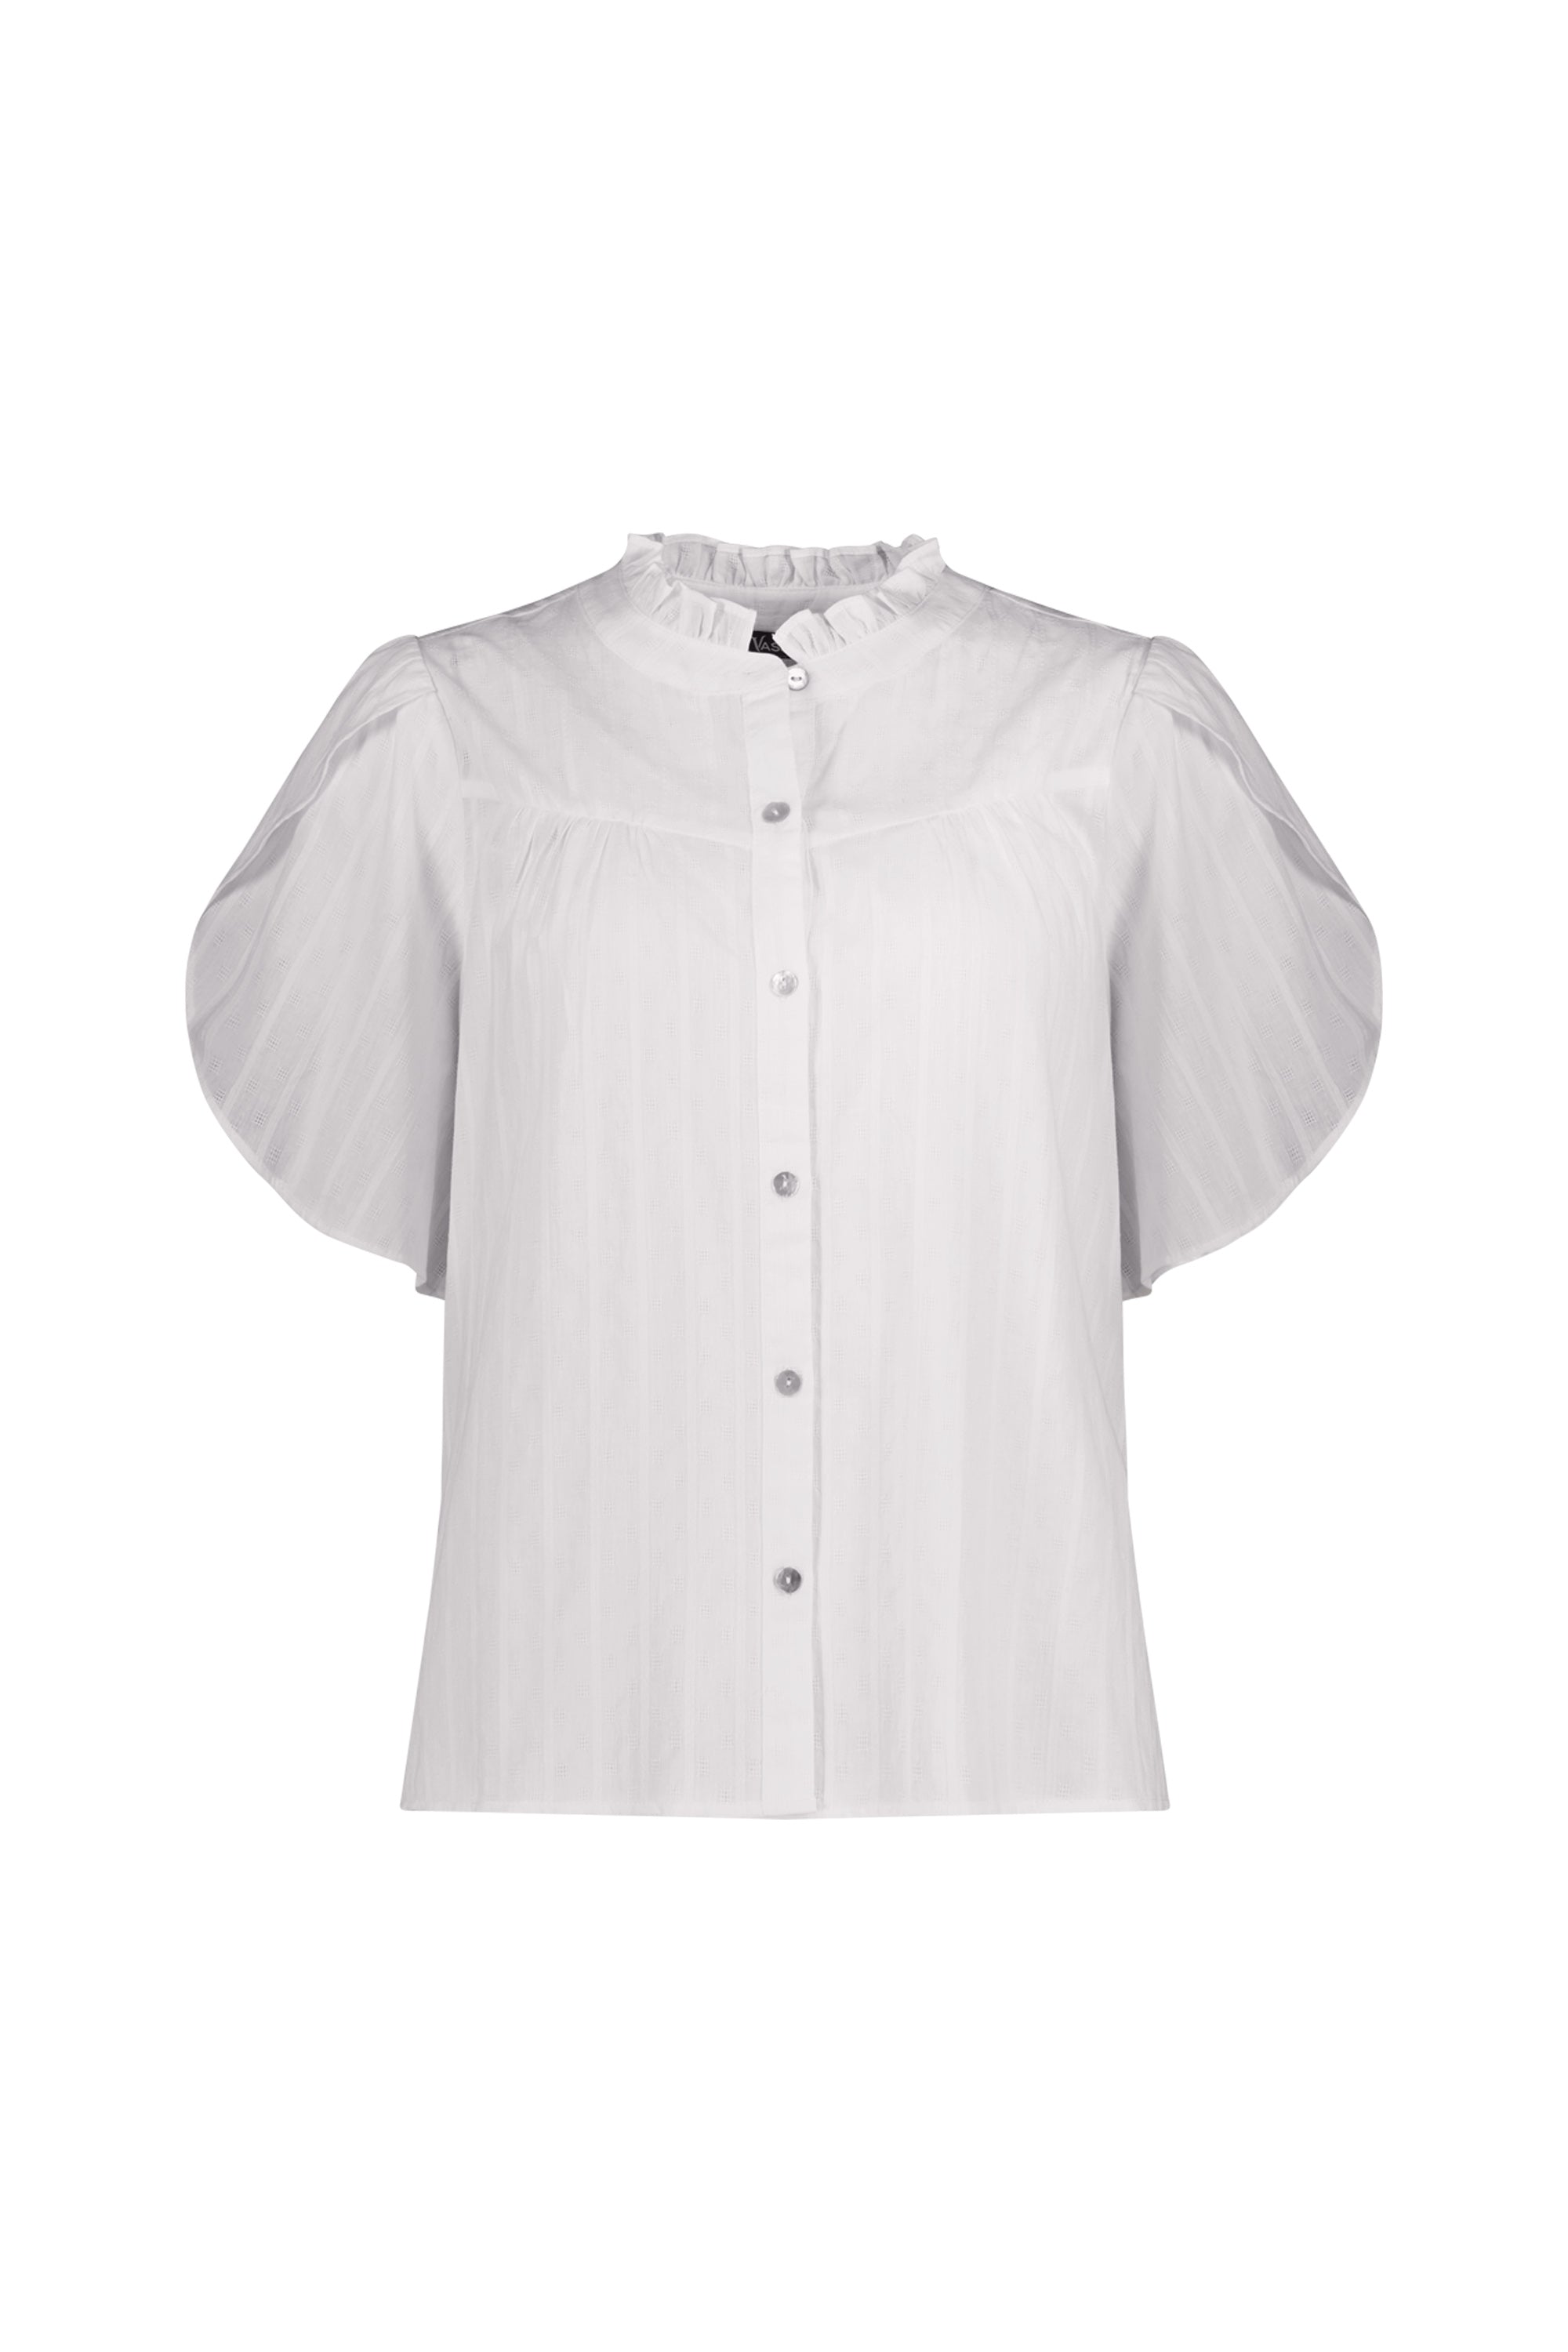 Vassalli Button Up Top with Petal Sleeve - White